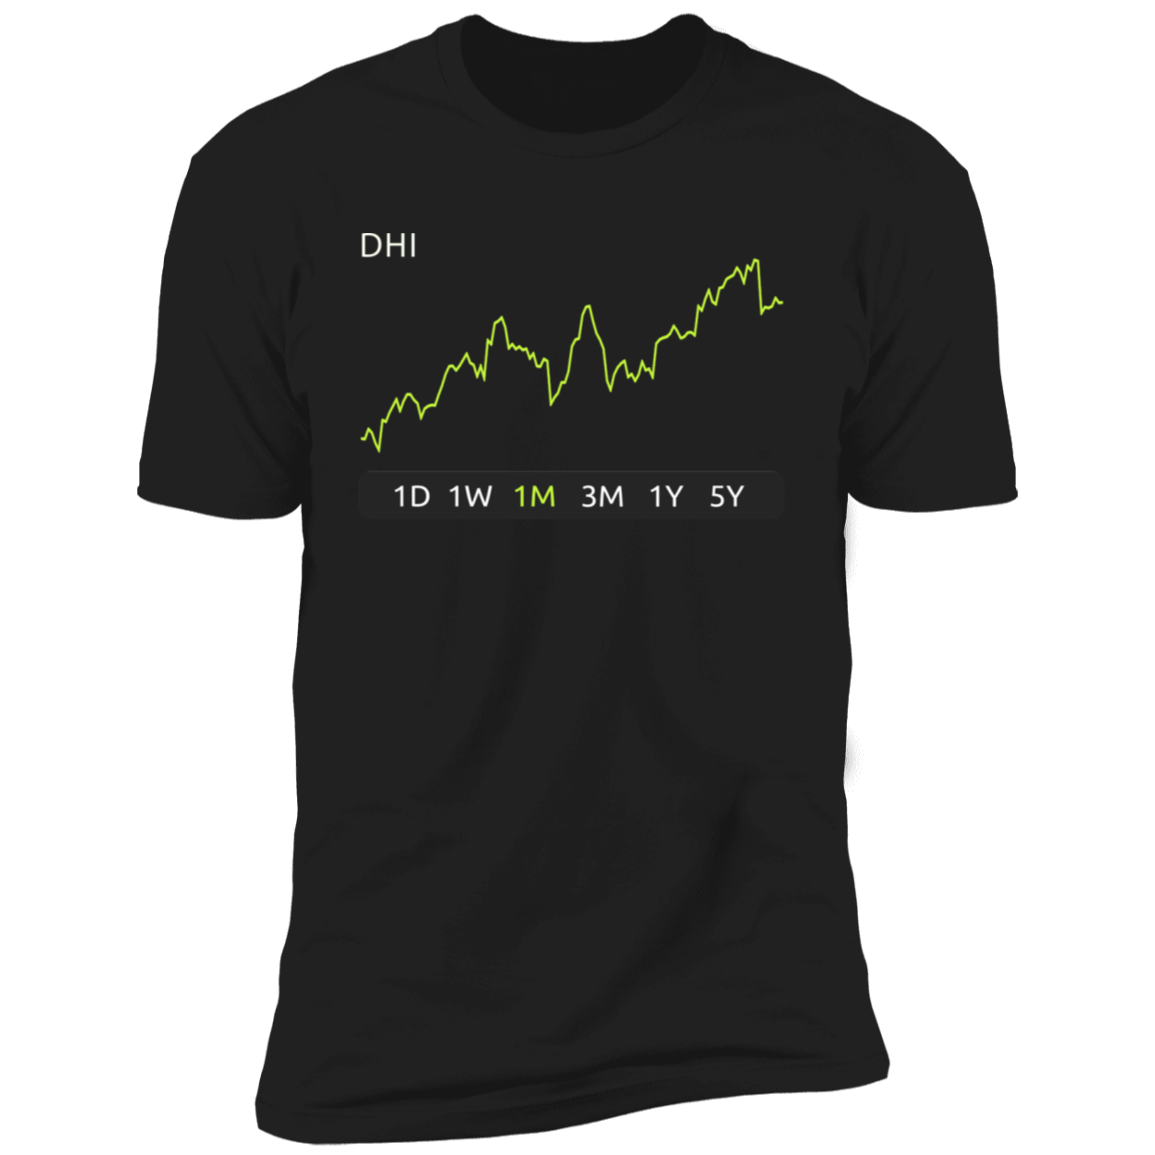 DHI Stock 1m Premium T-Shirt